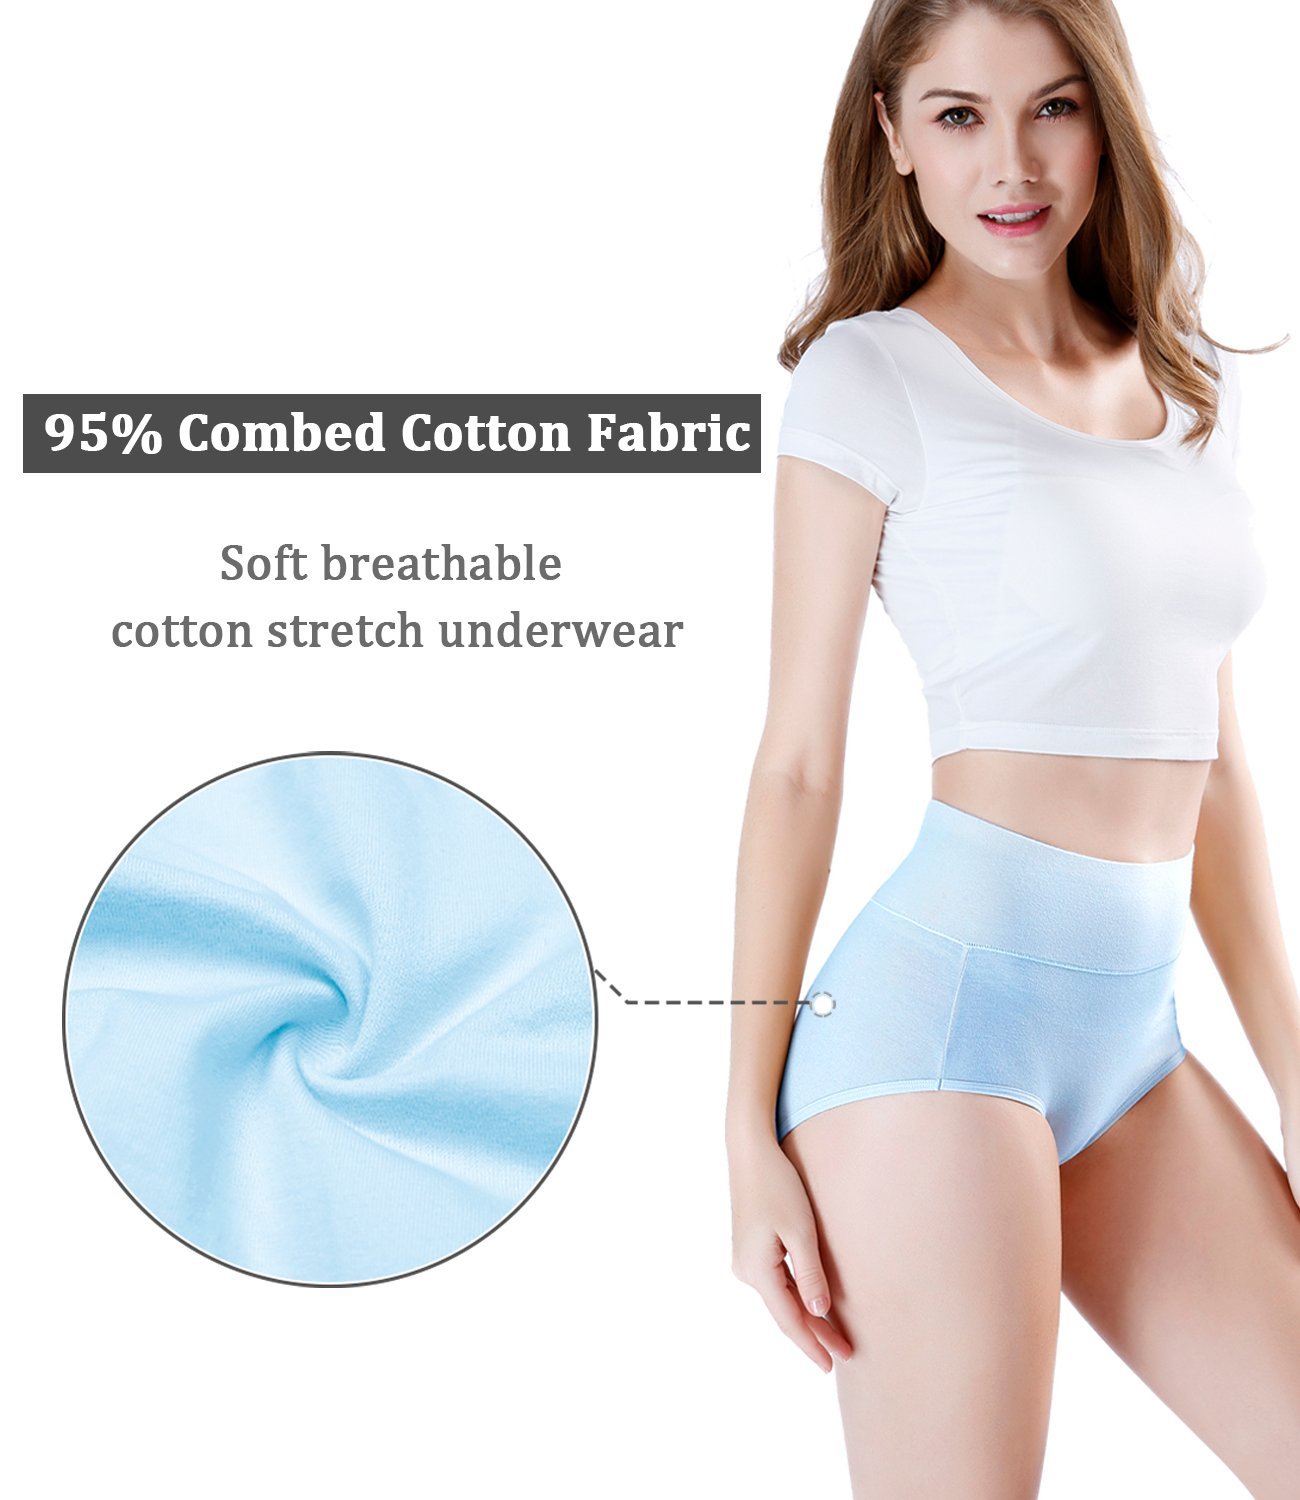 Molasus 5pcs Women's Soft Cotton Underwear Briefs High Waisted